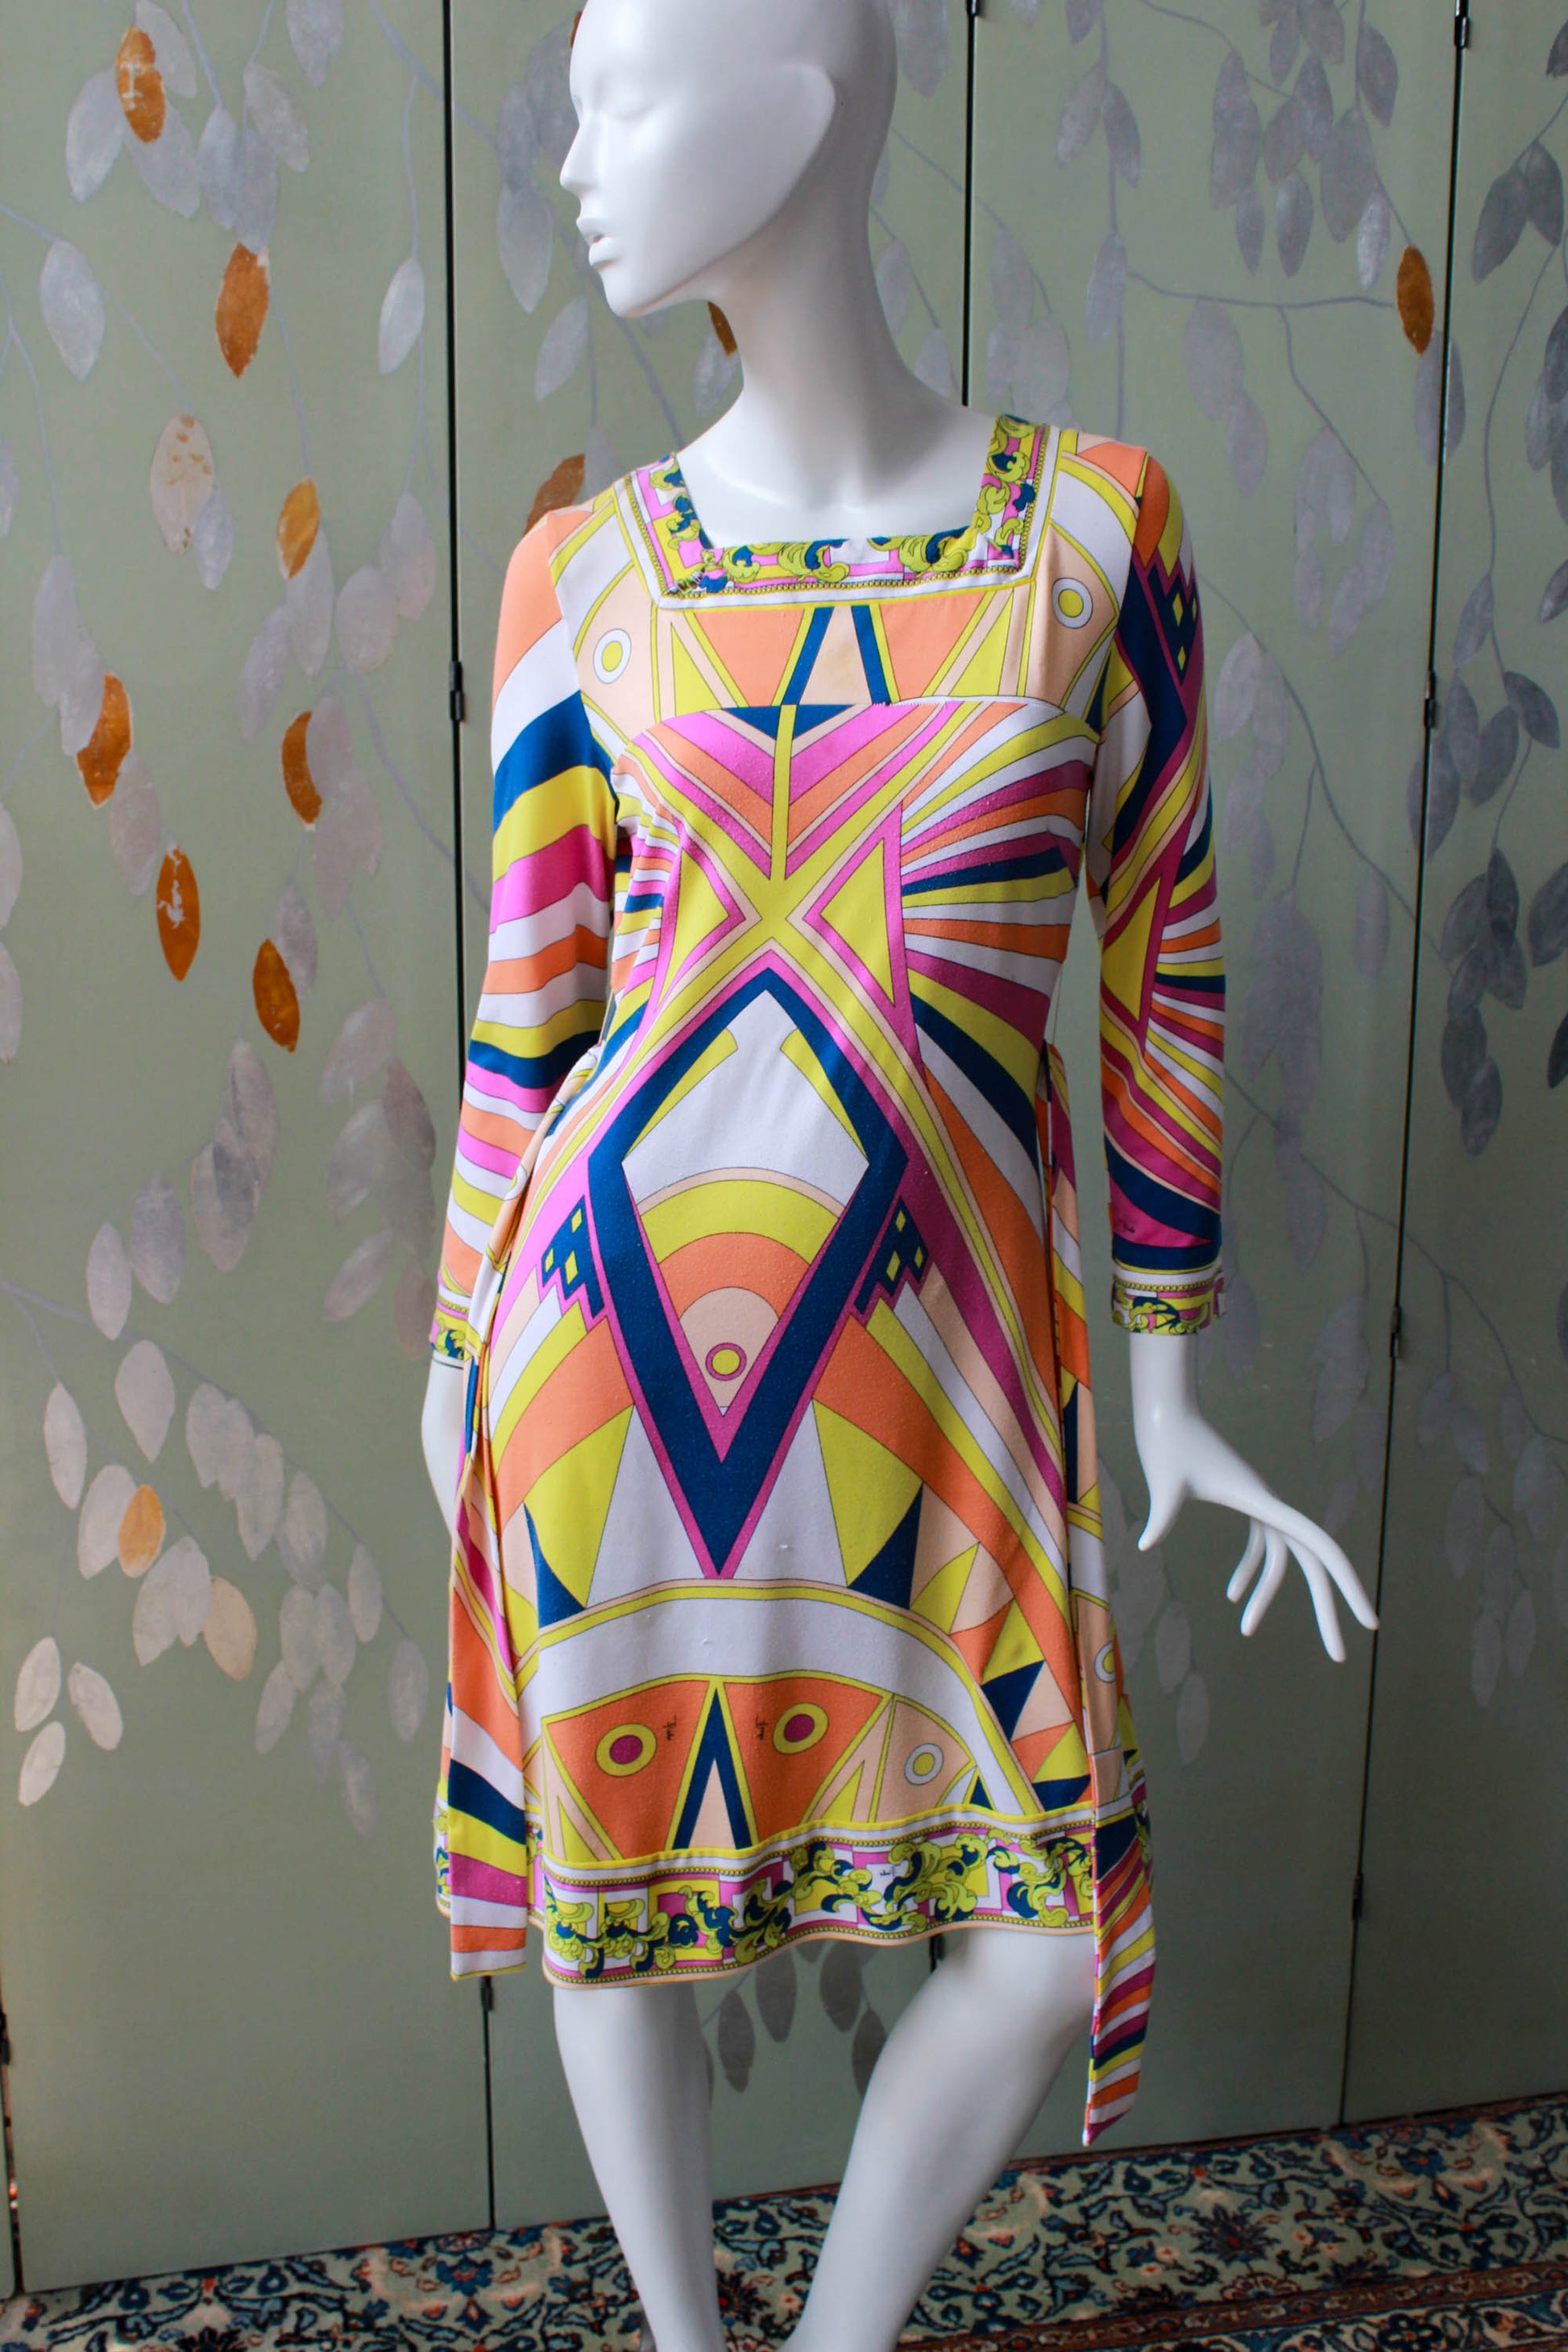 Emilio Pucci Patterned Silk Jersey Dress